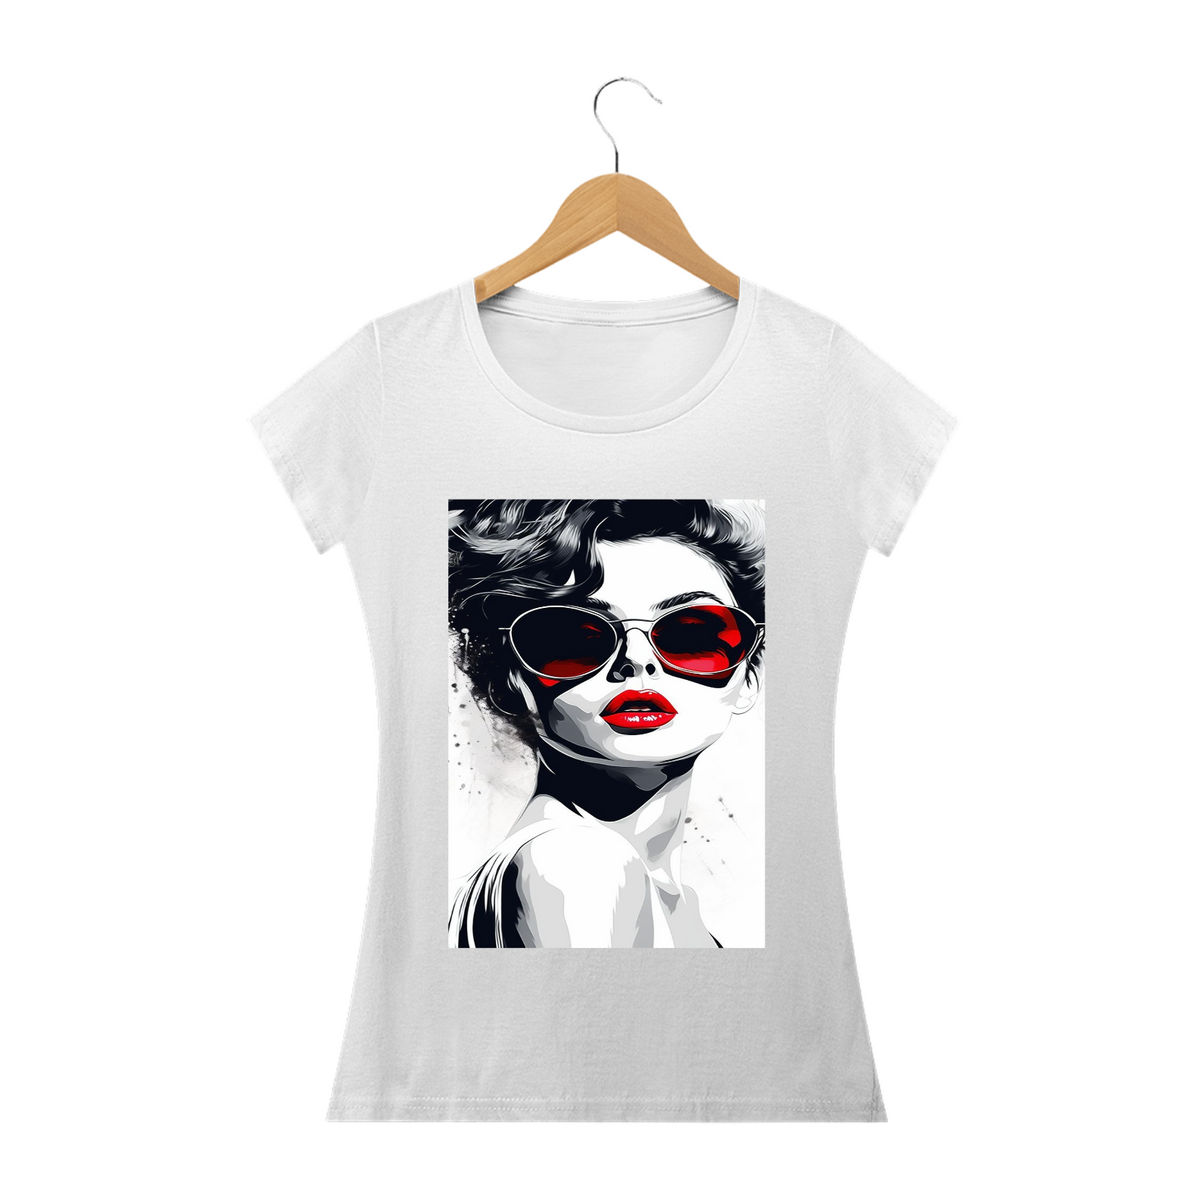 Nome do produto: Camiseta fã Art estilo feminino 